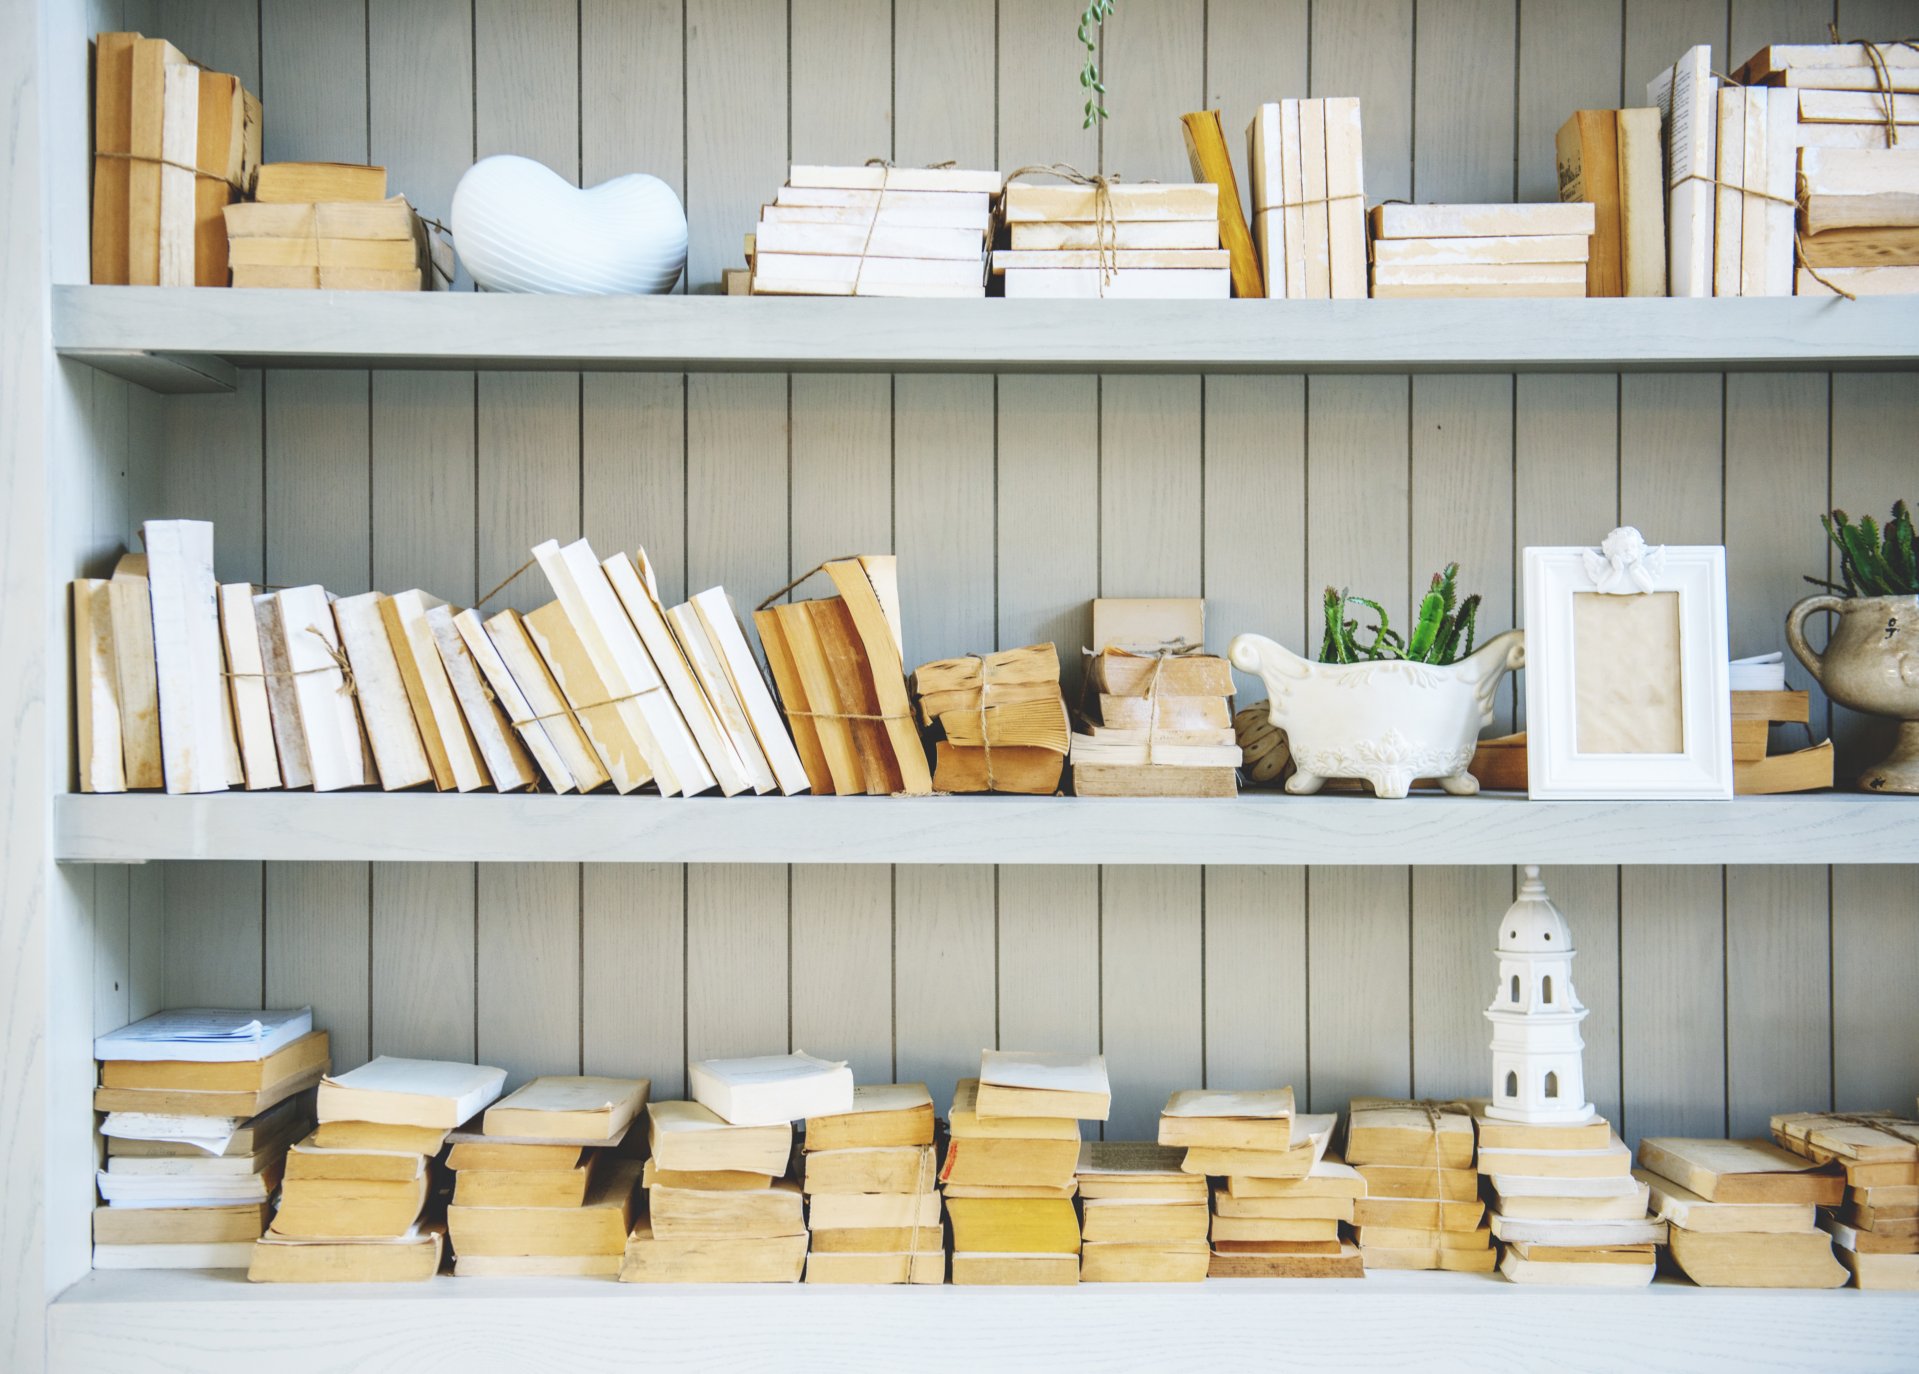 Book Shelf with Stack of No Cover Books, solliciter armoire de cuisine